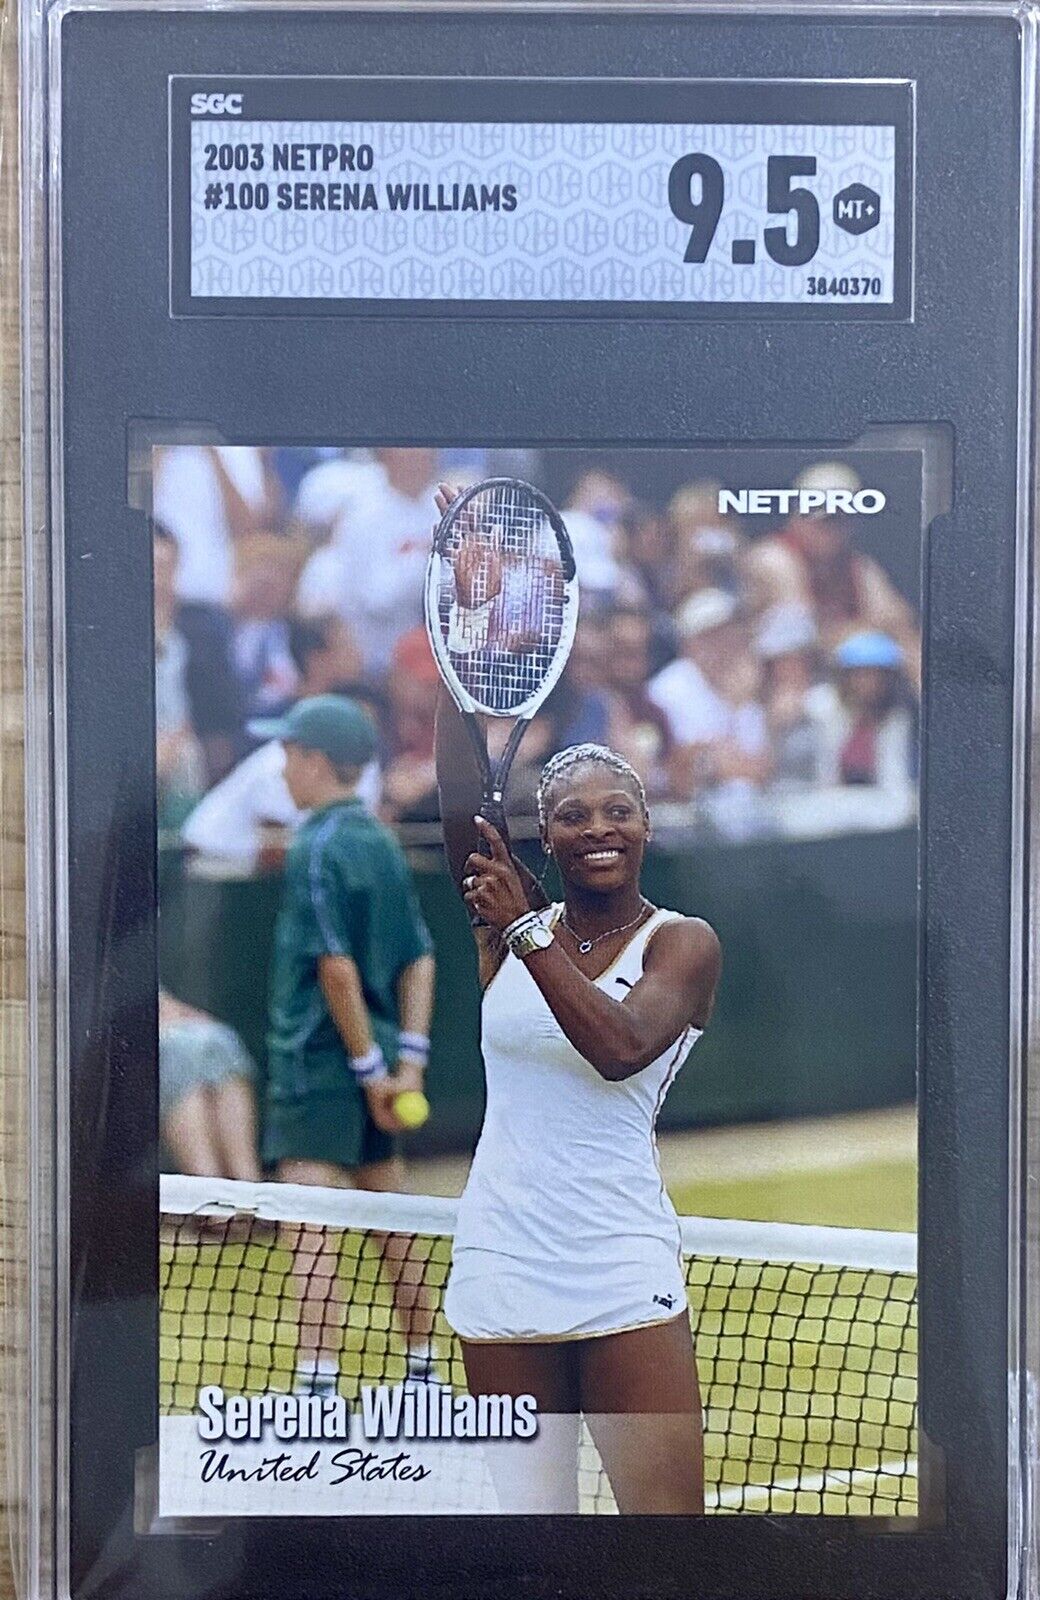 2003 Netpro Serena Williams SGC 9.5